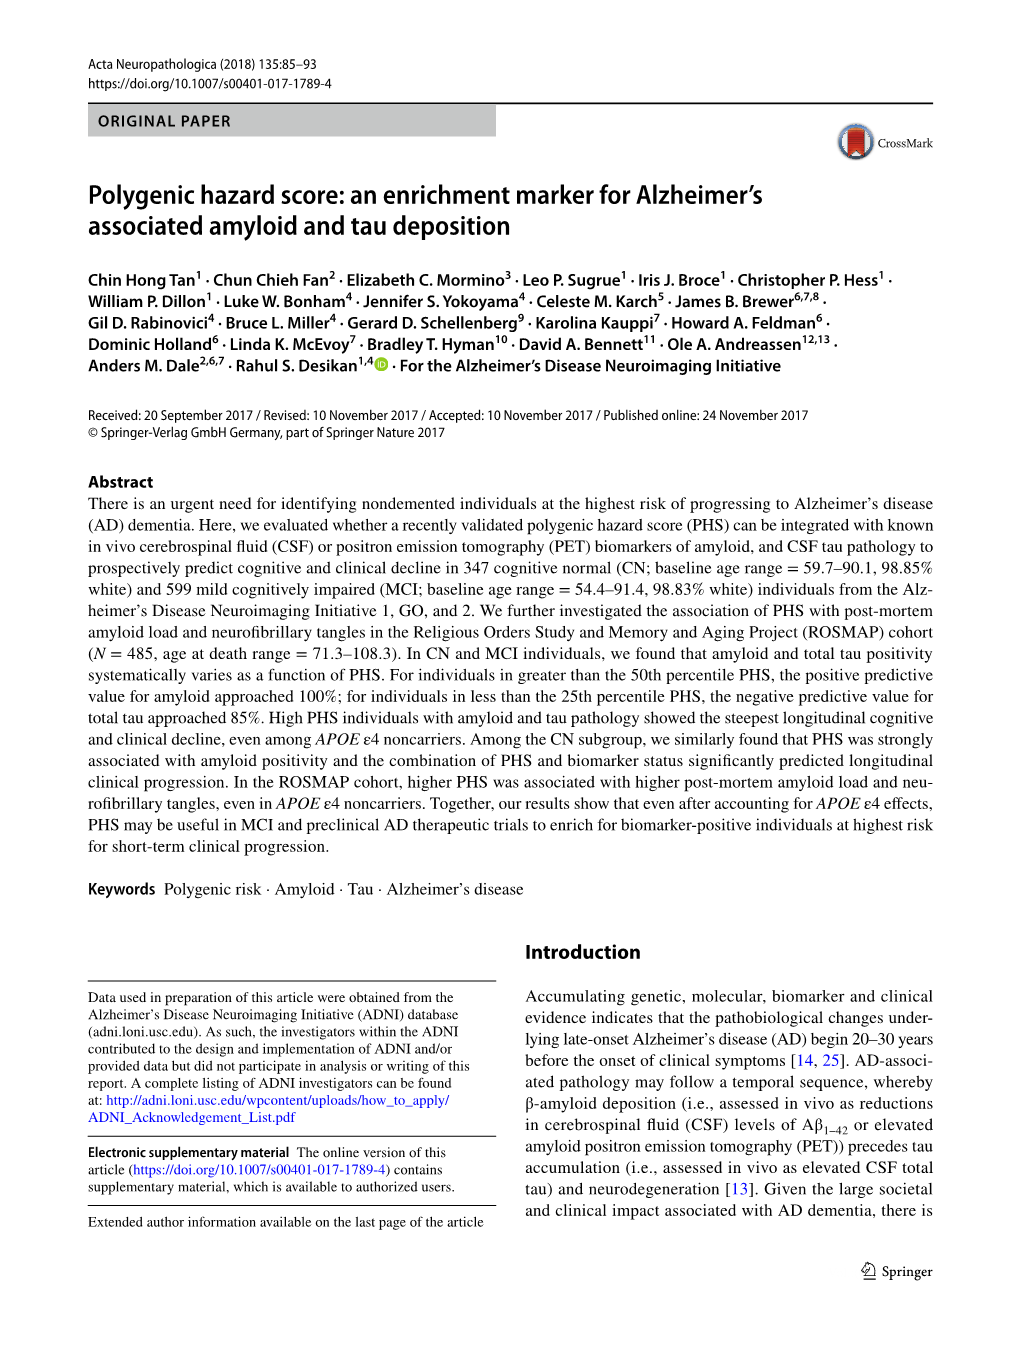 Polygenic Hazard Score: an Enrichment Marker for Alzheimer's Associated Amyloid and Tau Deposition